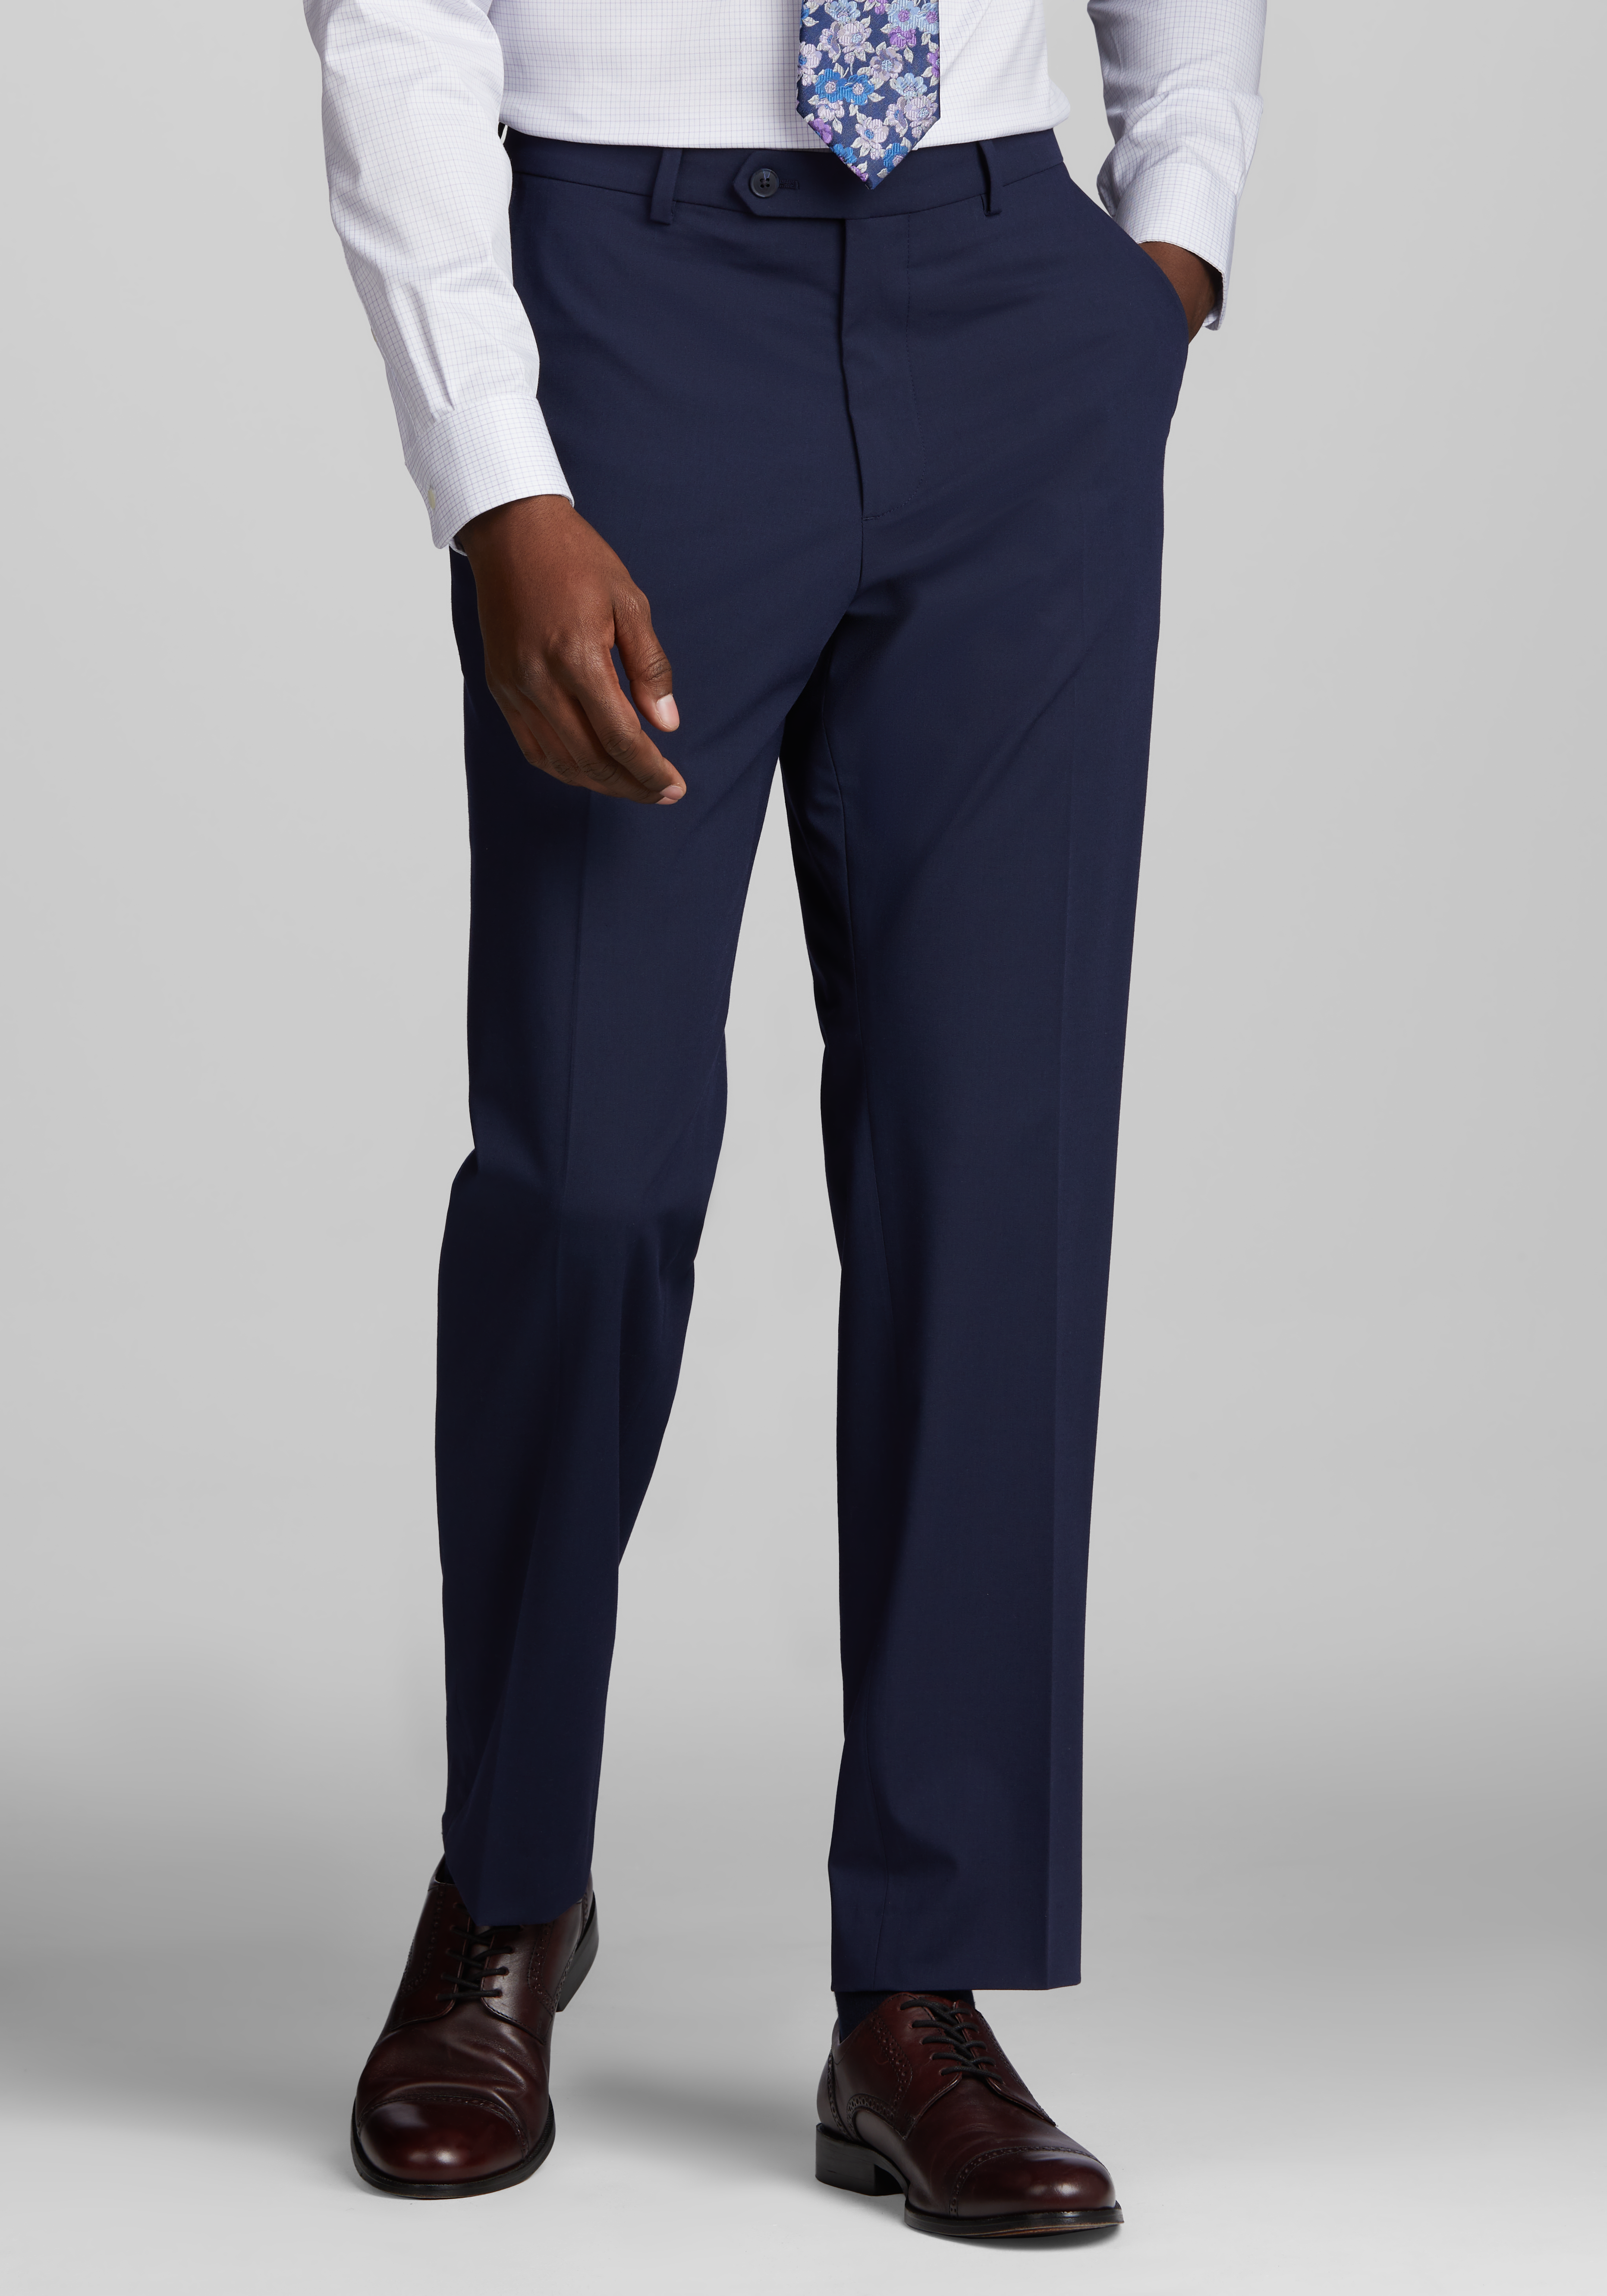  Calvin Klein Boys' Formal Suit Vest, Tailored Fit & Adjustable  Back Strap, 4-button Single Breasted Closure & 2 Slit Pockets, Black, 8:  Business Suit Pants Sets: Clothing, Shoes & Jewelry